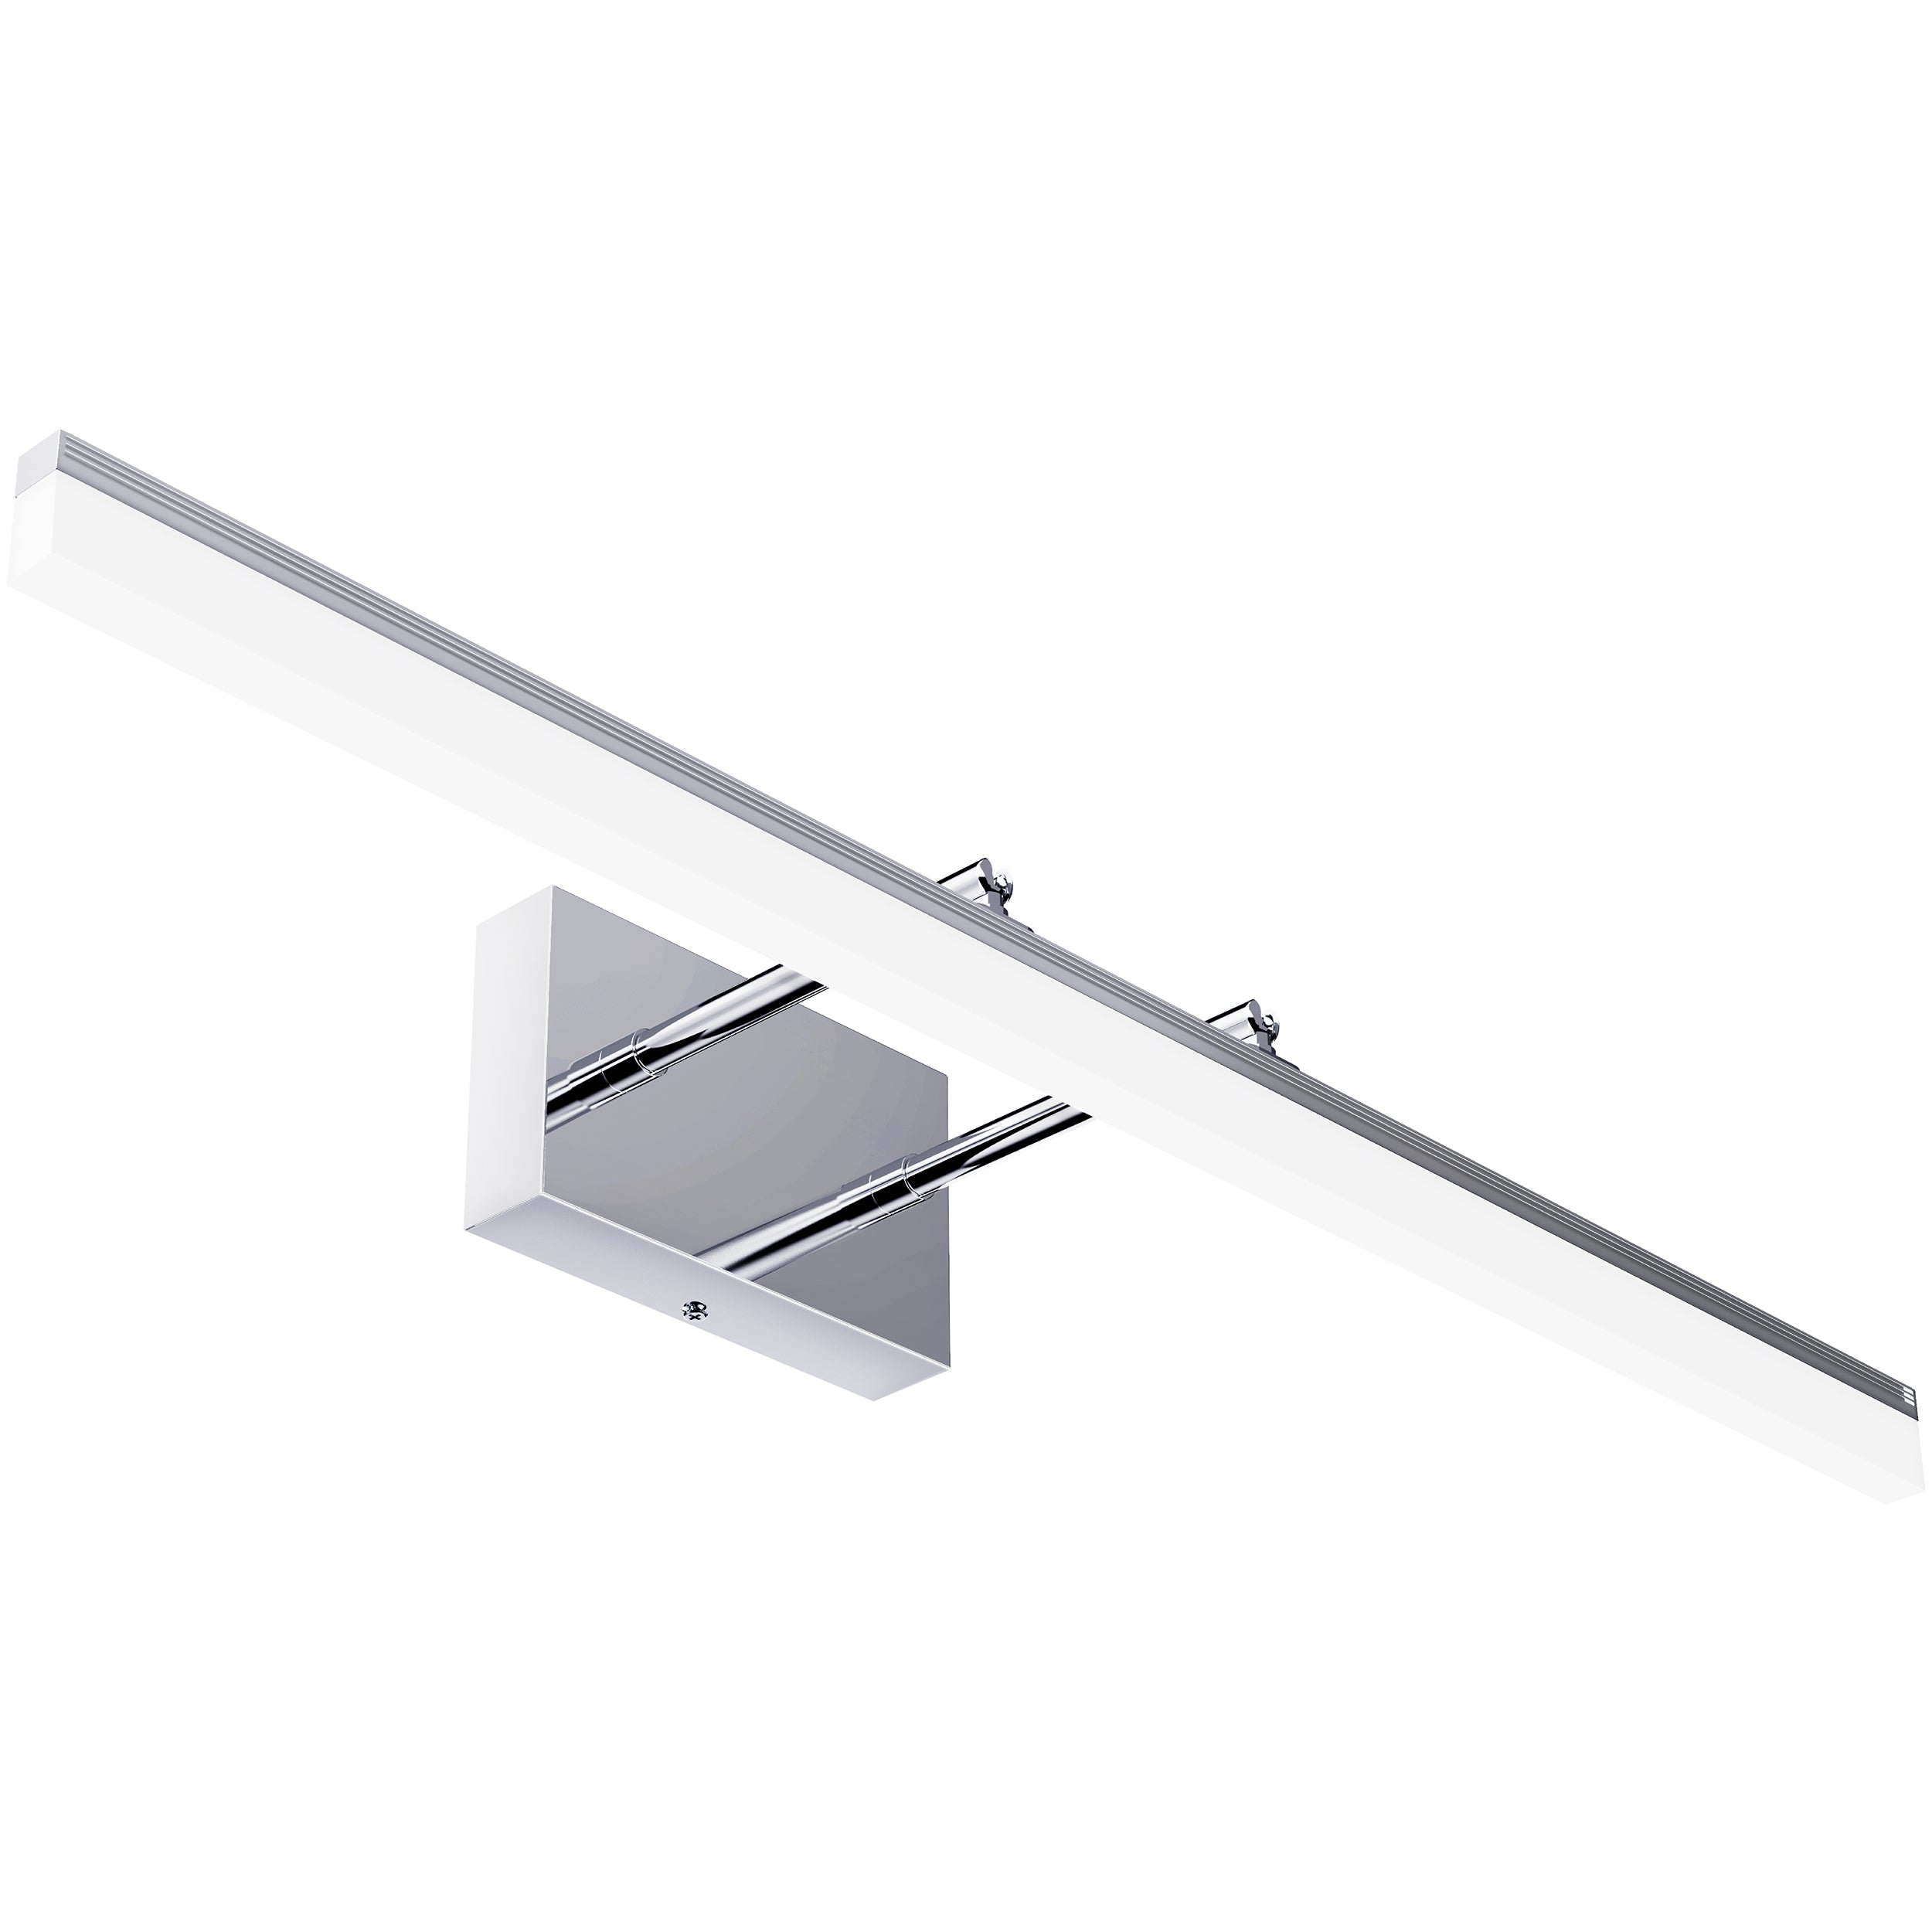 Ultralux Slim LED Vanity Light Bar - Wall Mounted LED Light Bar - TRIAC  Dimmable, Modern Bathroom Li…See more Ultralux Slim LED Vanity Light Bar 